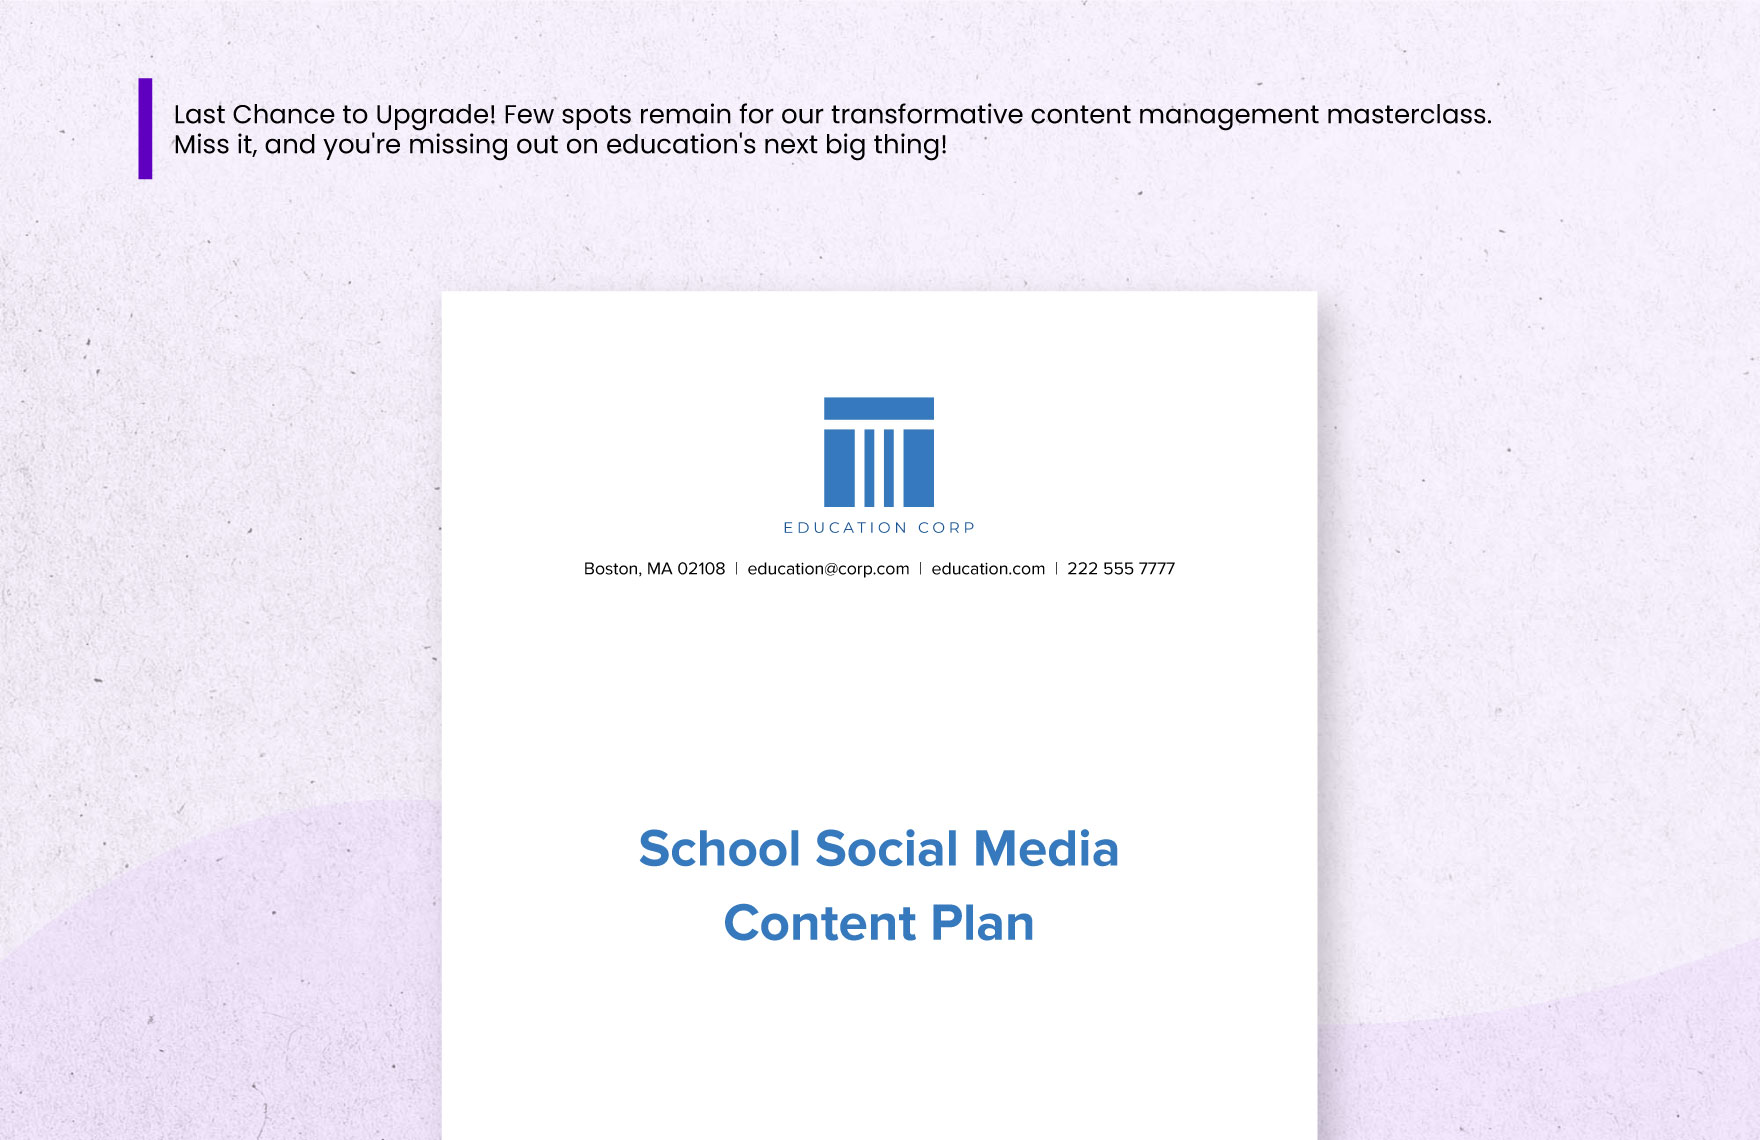 School Social Media Content Plan Template